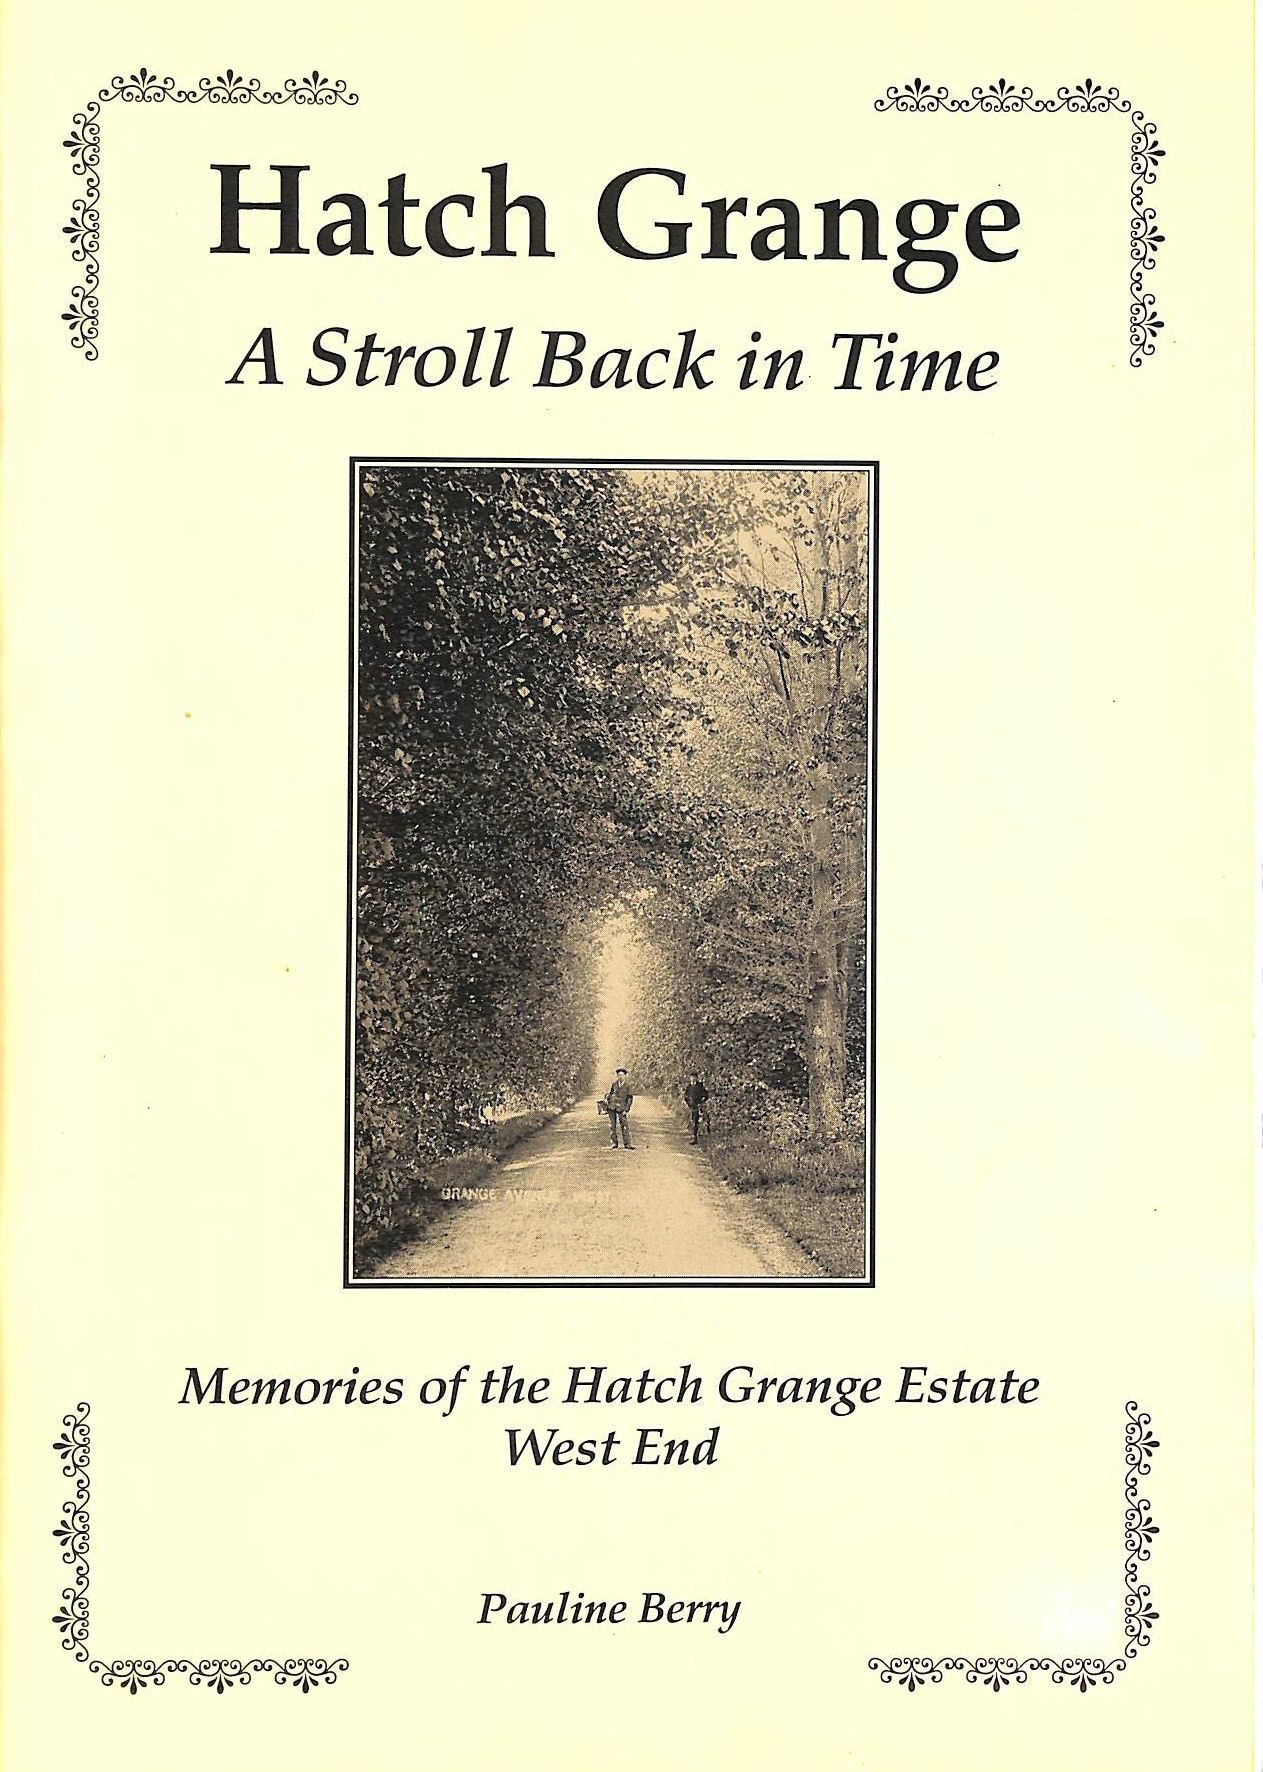 PAULINE BERRY - Hatch Grange, A Stroll Back in Time